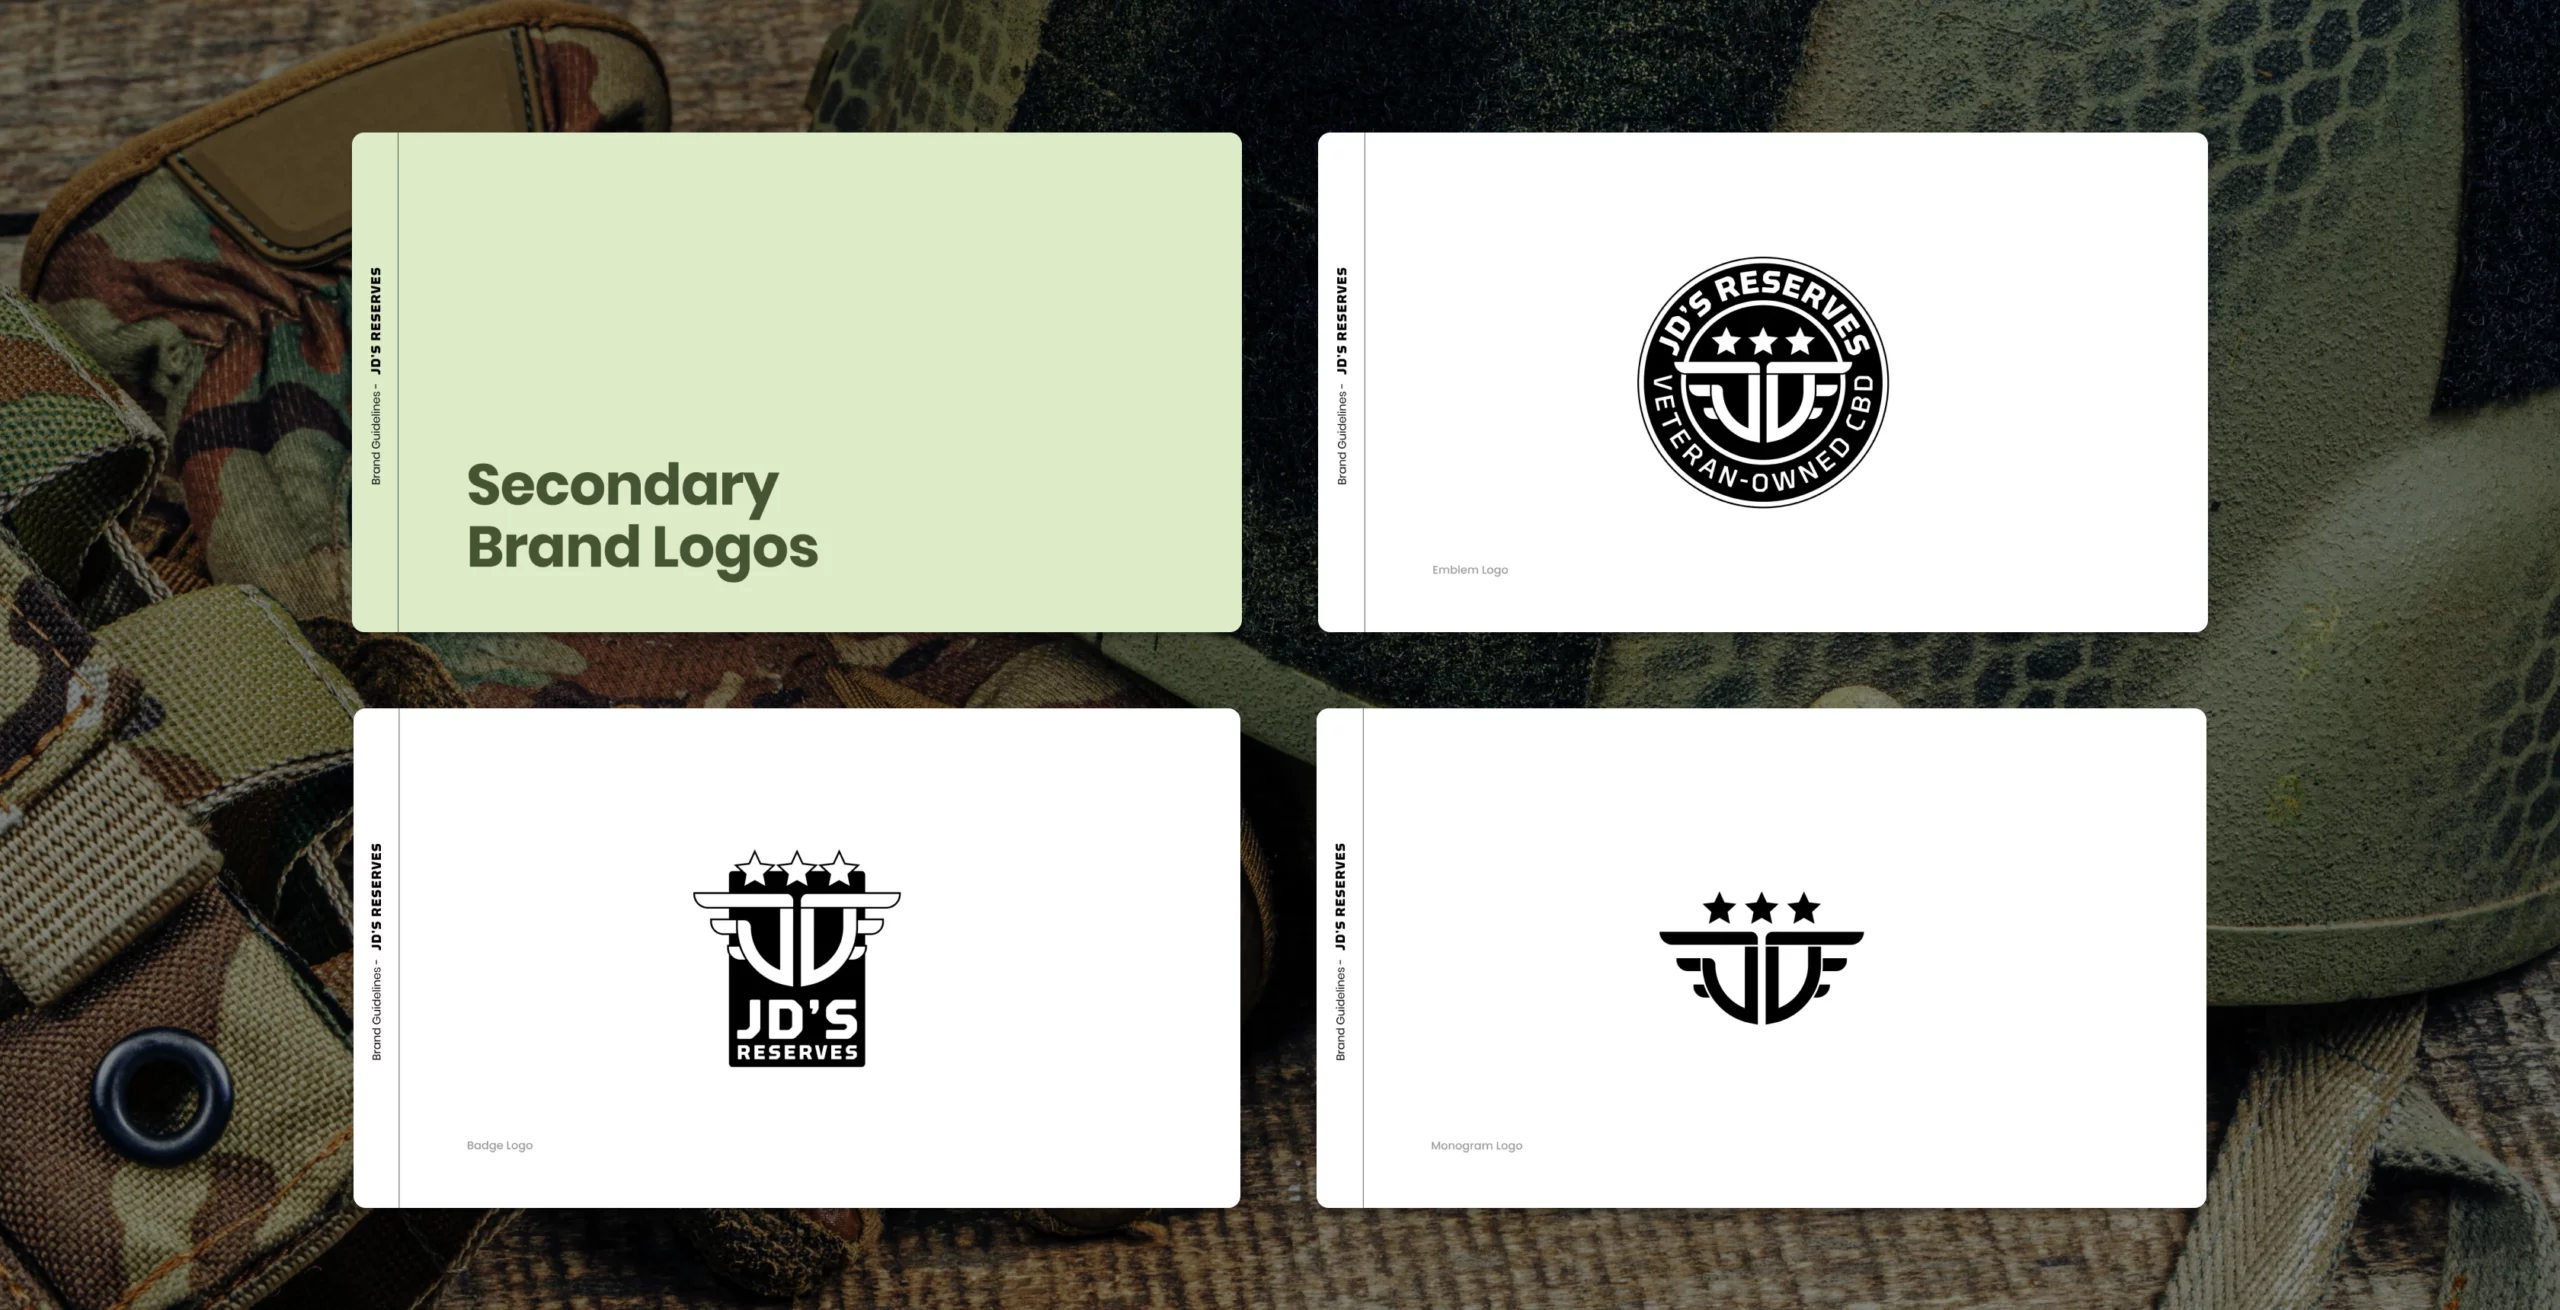 jds_reserves_secondary_logos